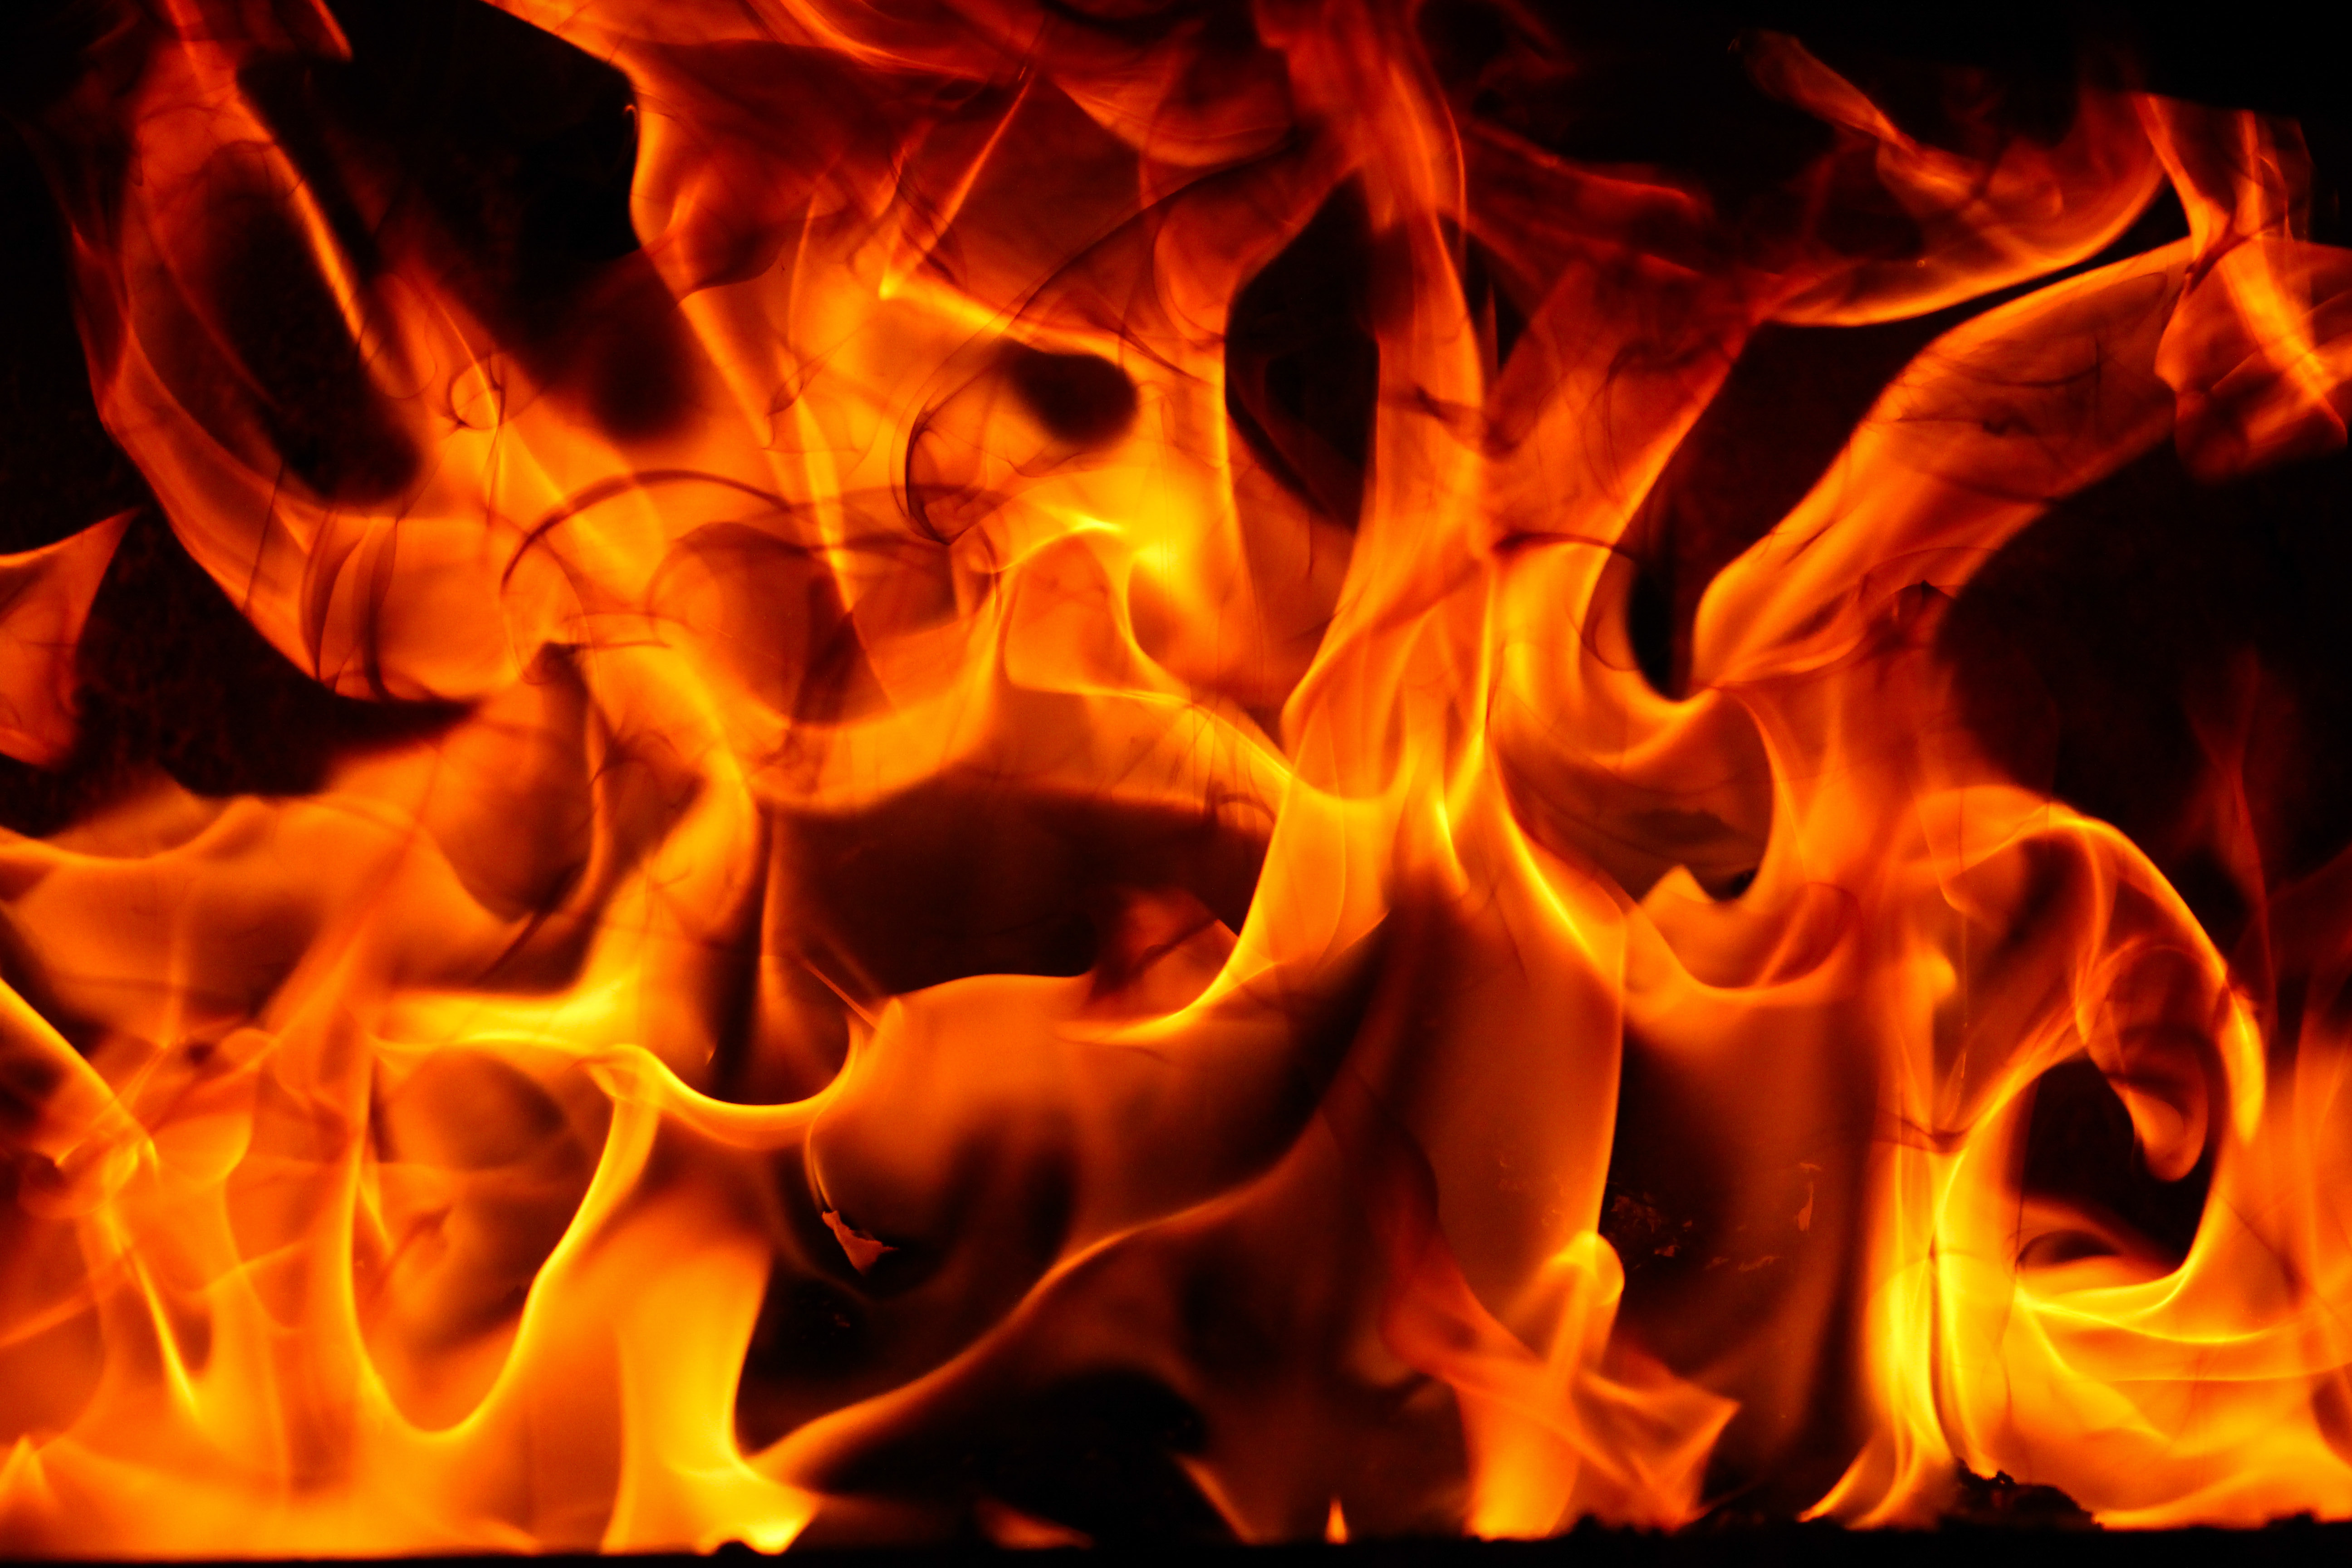 flame wallpaper,flame,fire,heat,orange